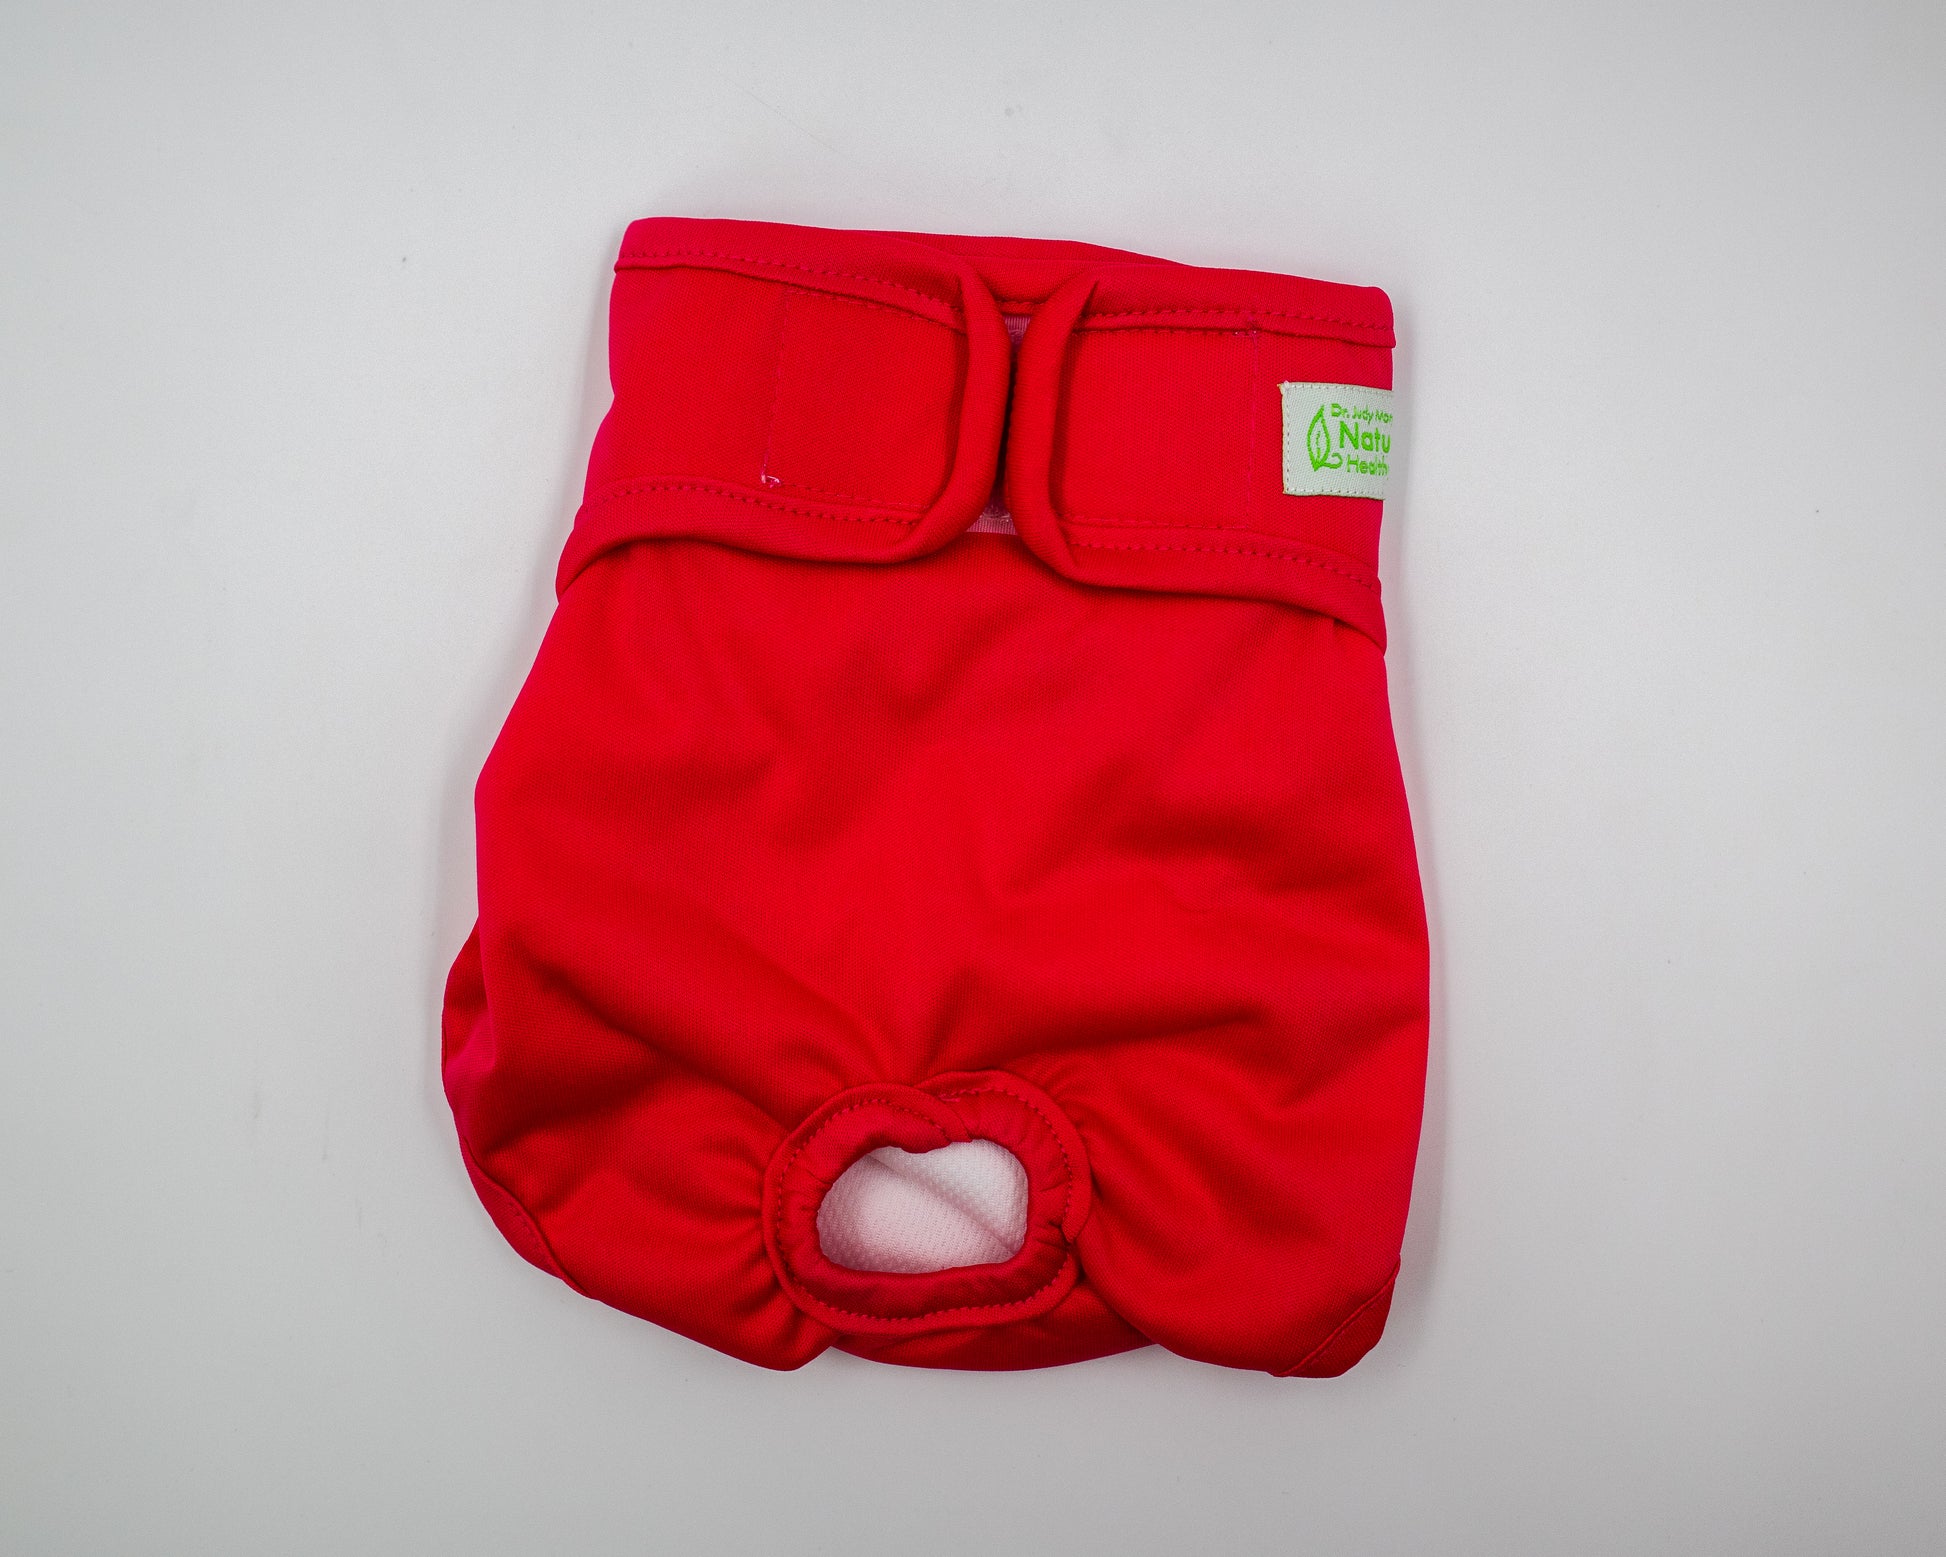 destyer Washable Absorbency Incontinence Aid Cotton Underwear